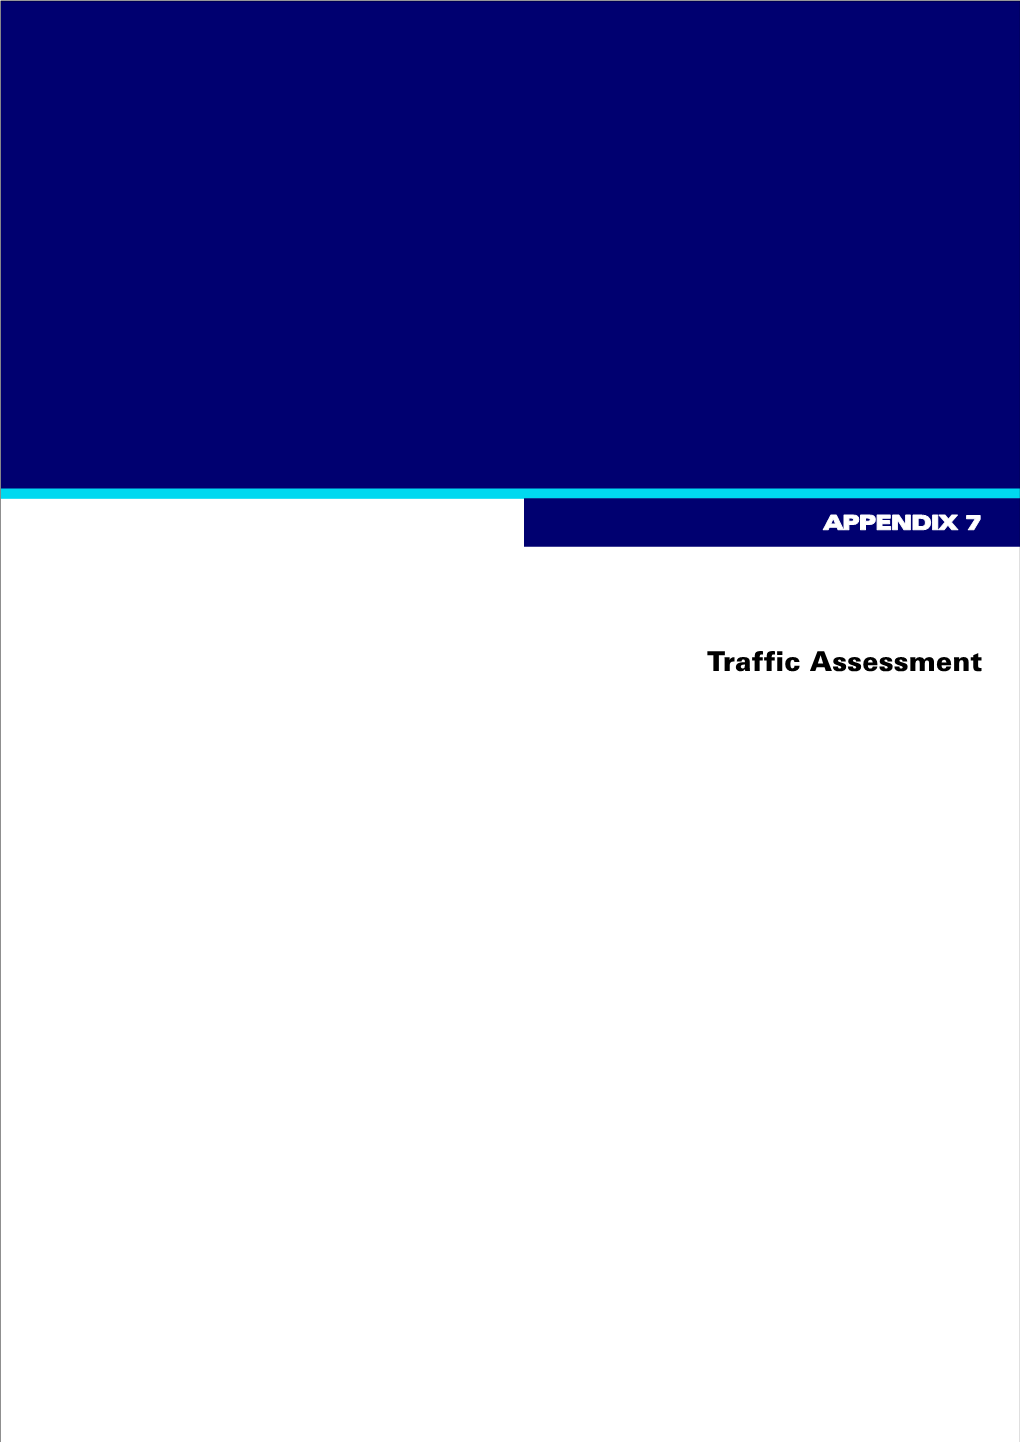 Traffic Impact Assessment for Proposed Ammonium Nitrate Emulsion